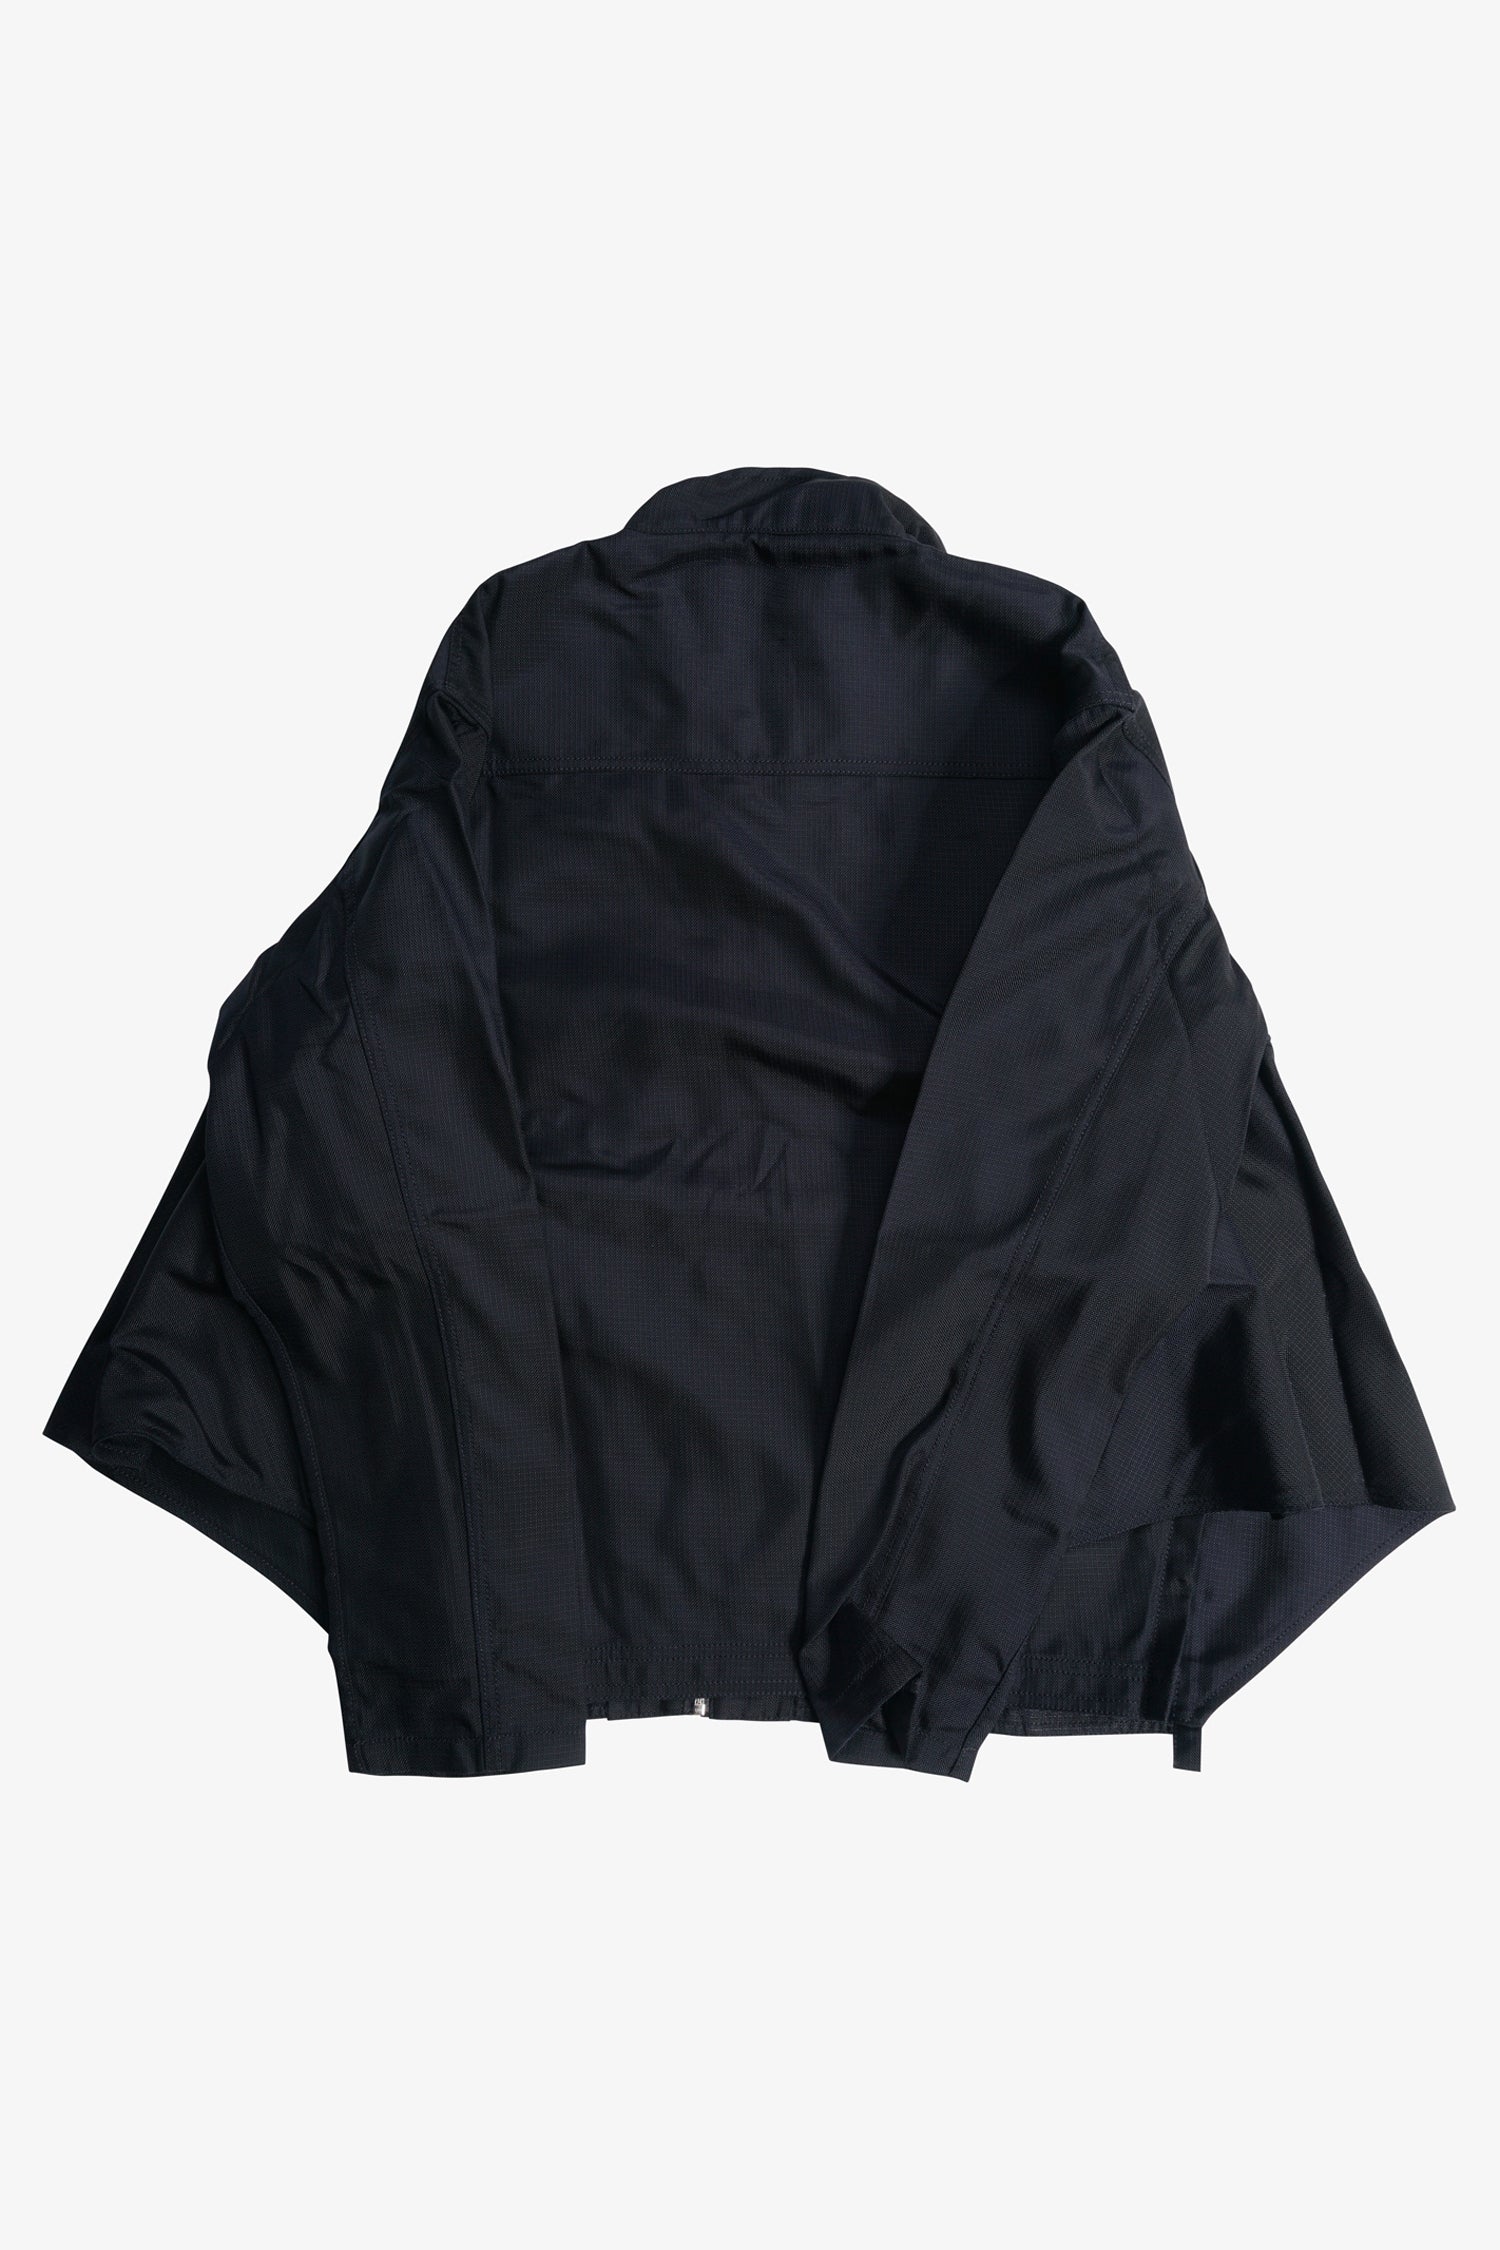 Selectshop FRAME - AFFIX A.F.F Jacket Outerwear Dubai